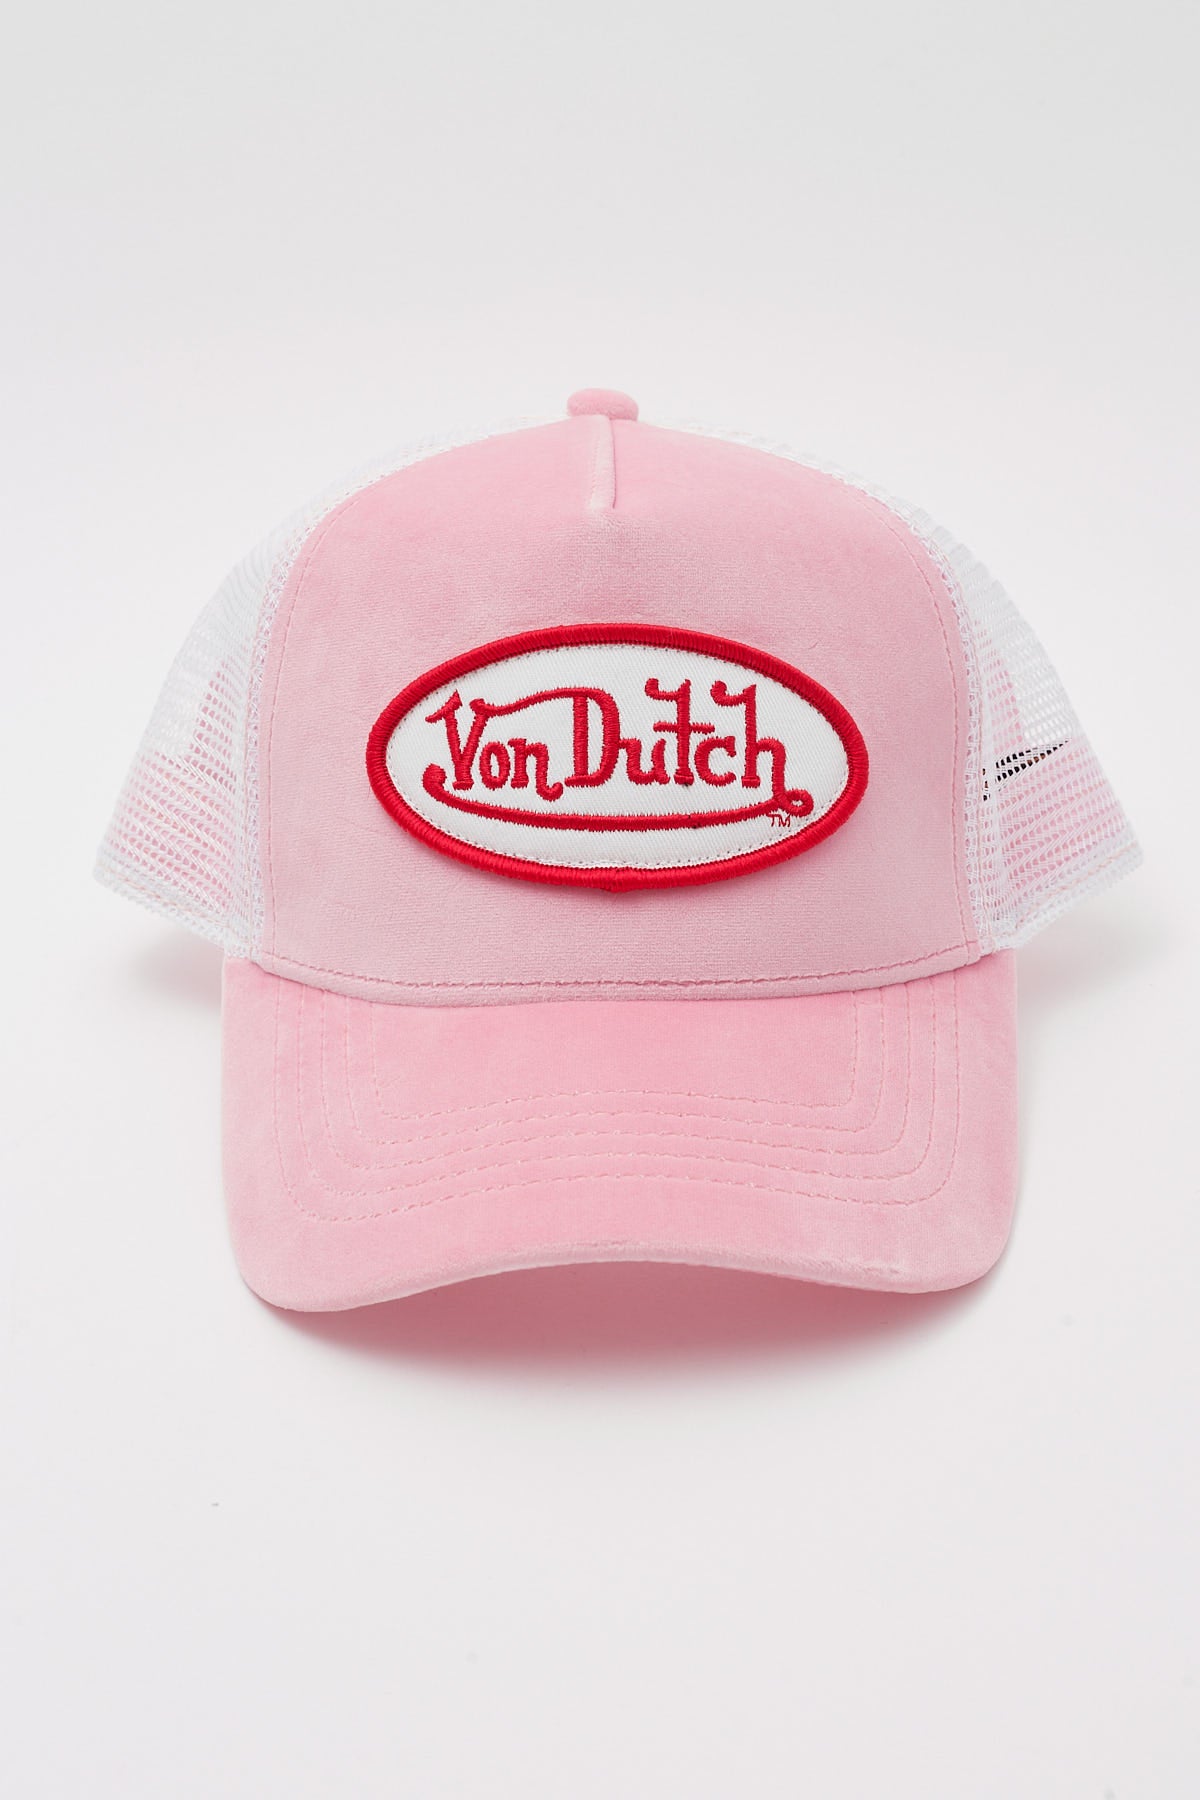 Von Dutch Pink Crush Velvet Trucker Pink Velvet